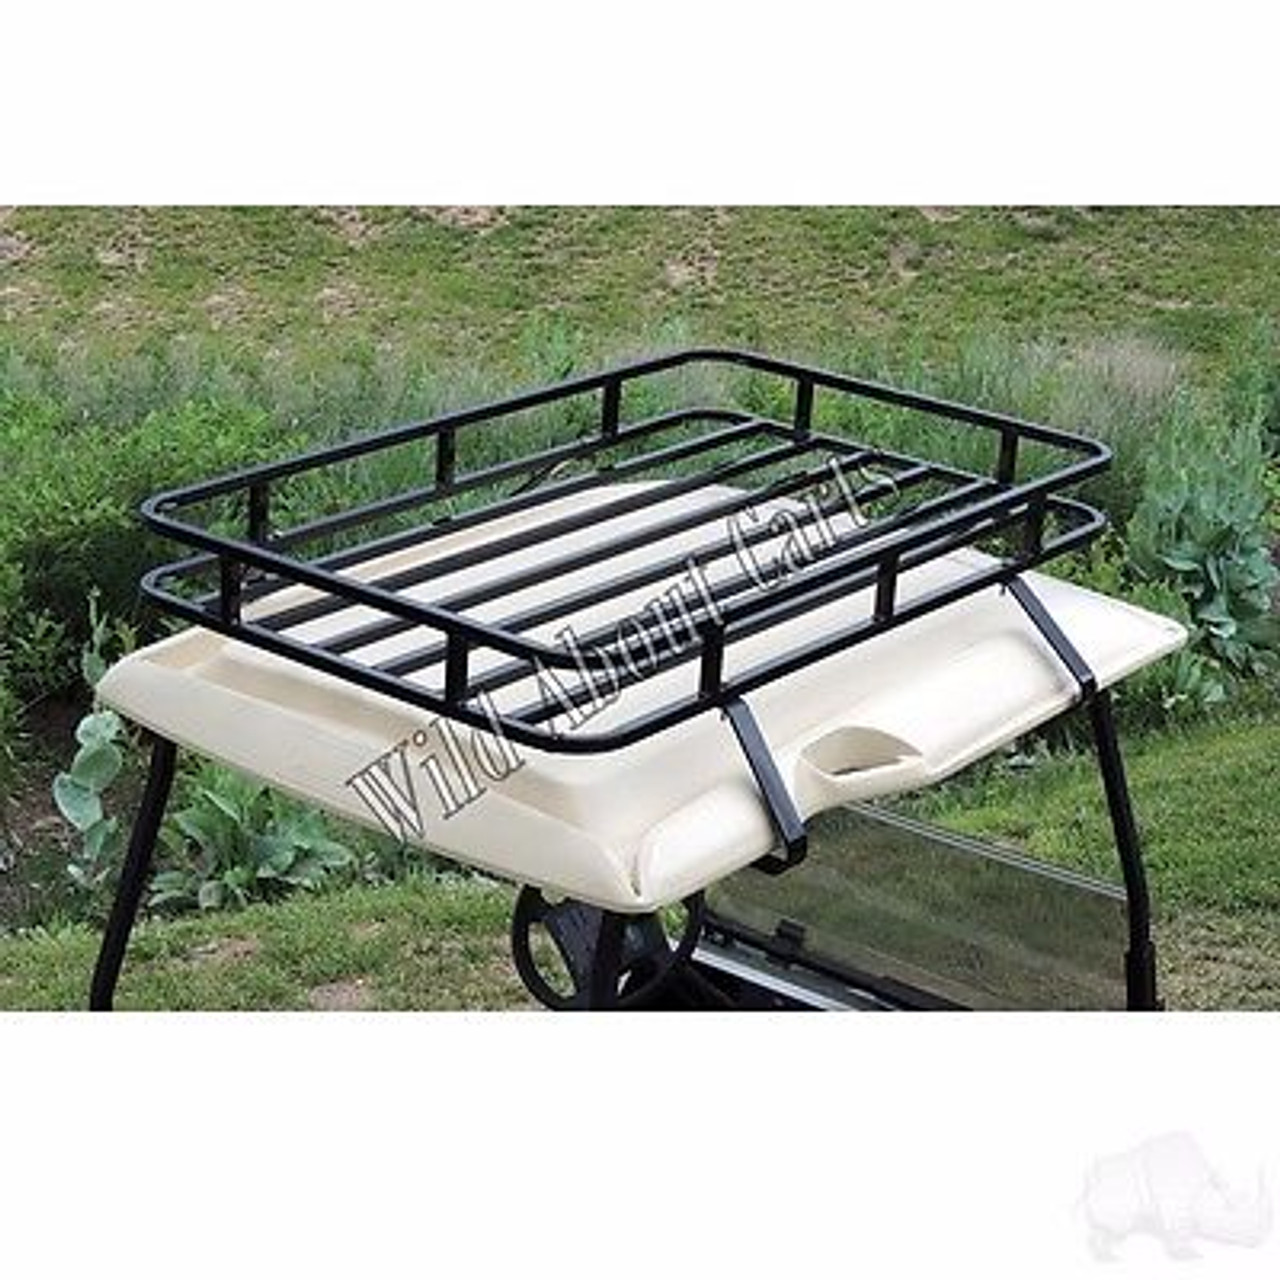 Club Car DS Golf Cart Roof Rack Storage System, ACC-RR02